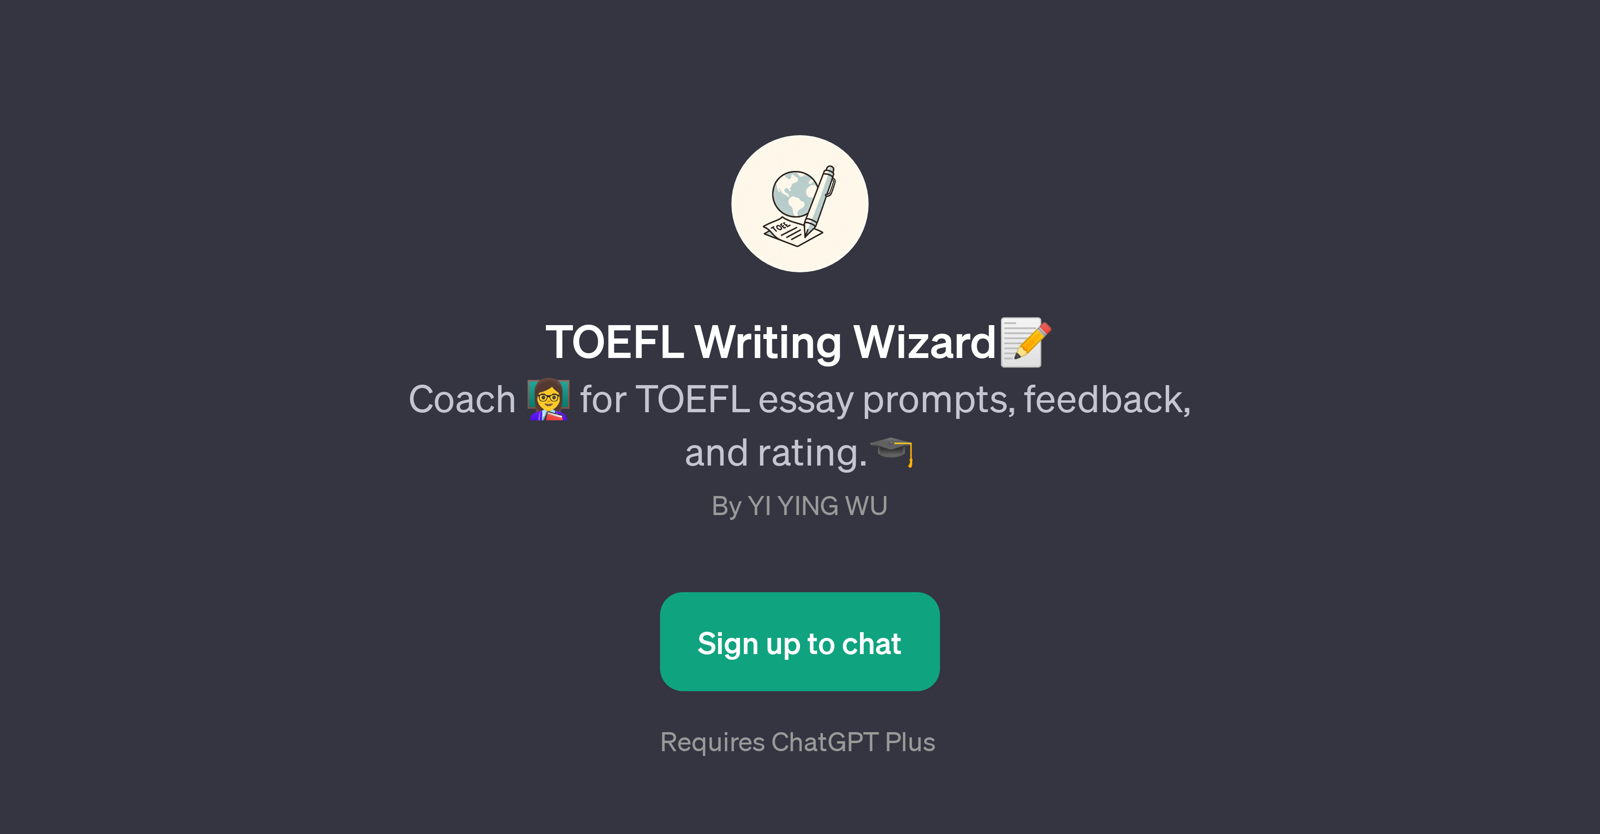 TOEFL Writing Wizard website